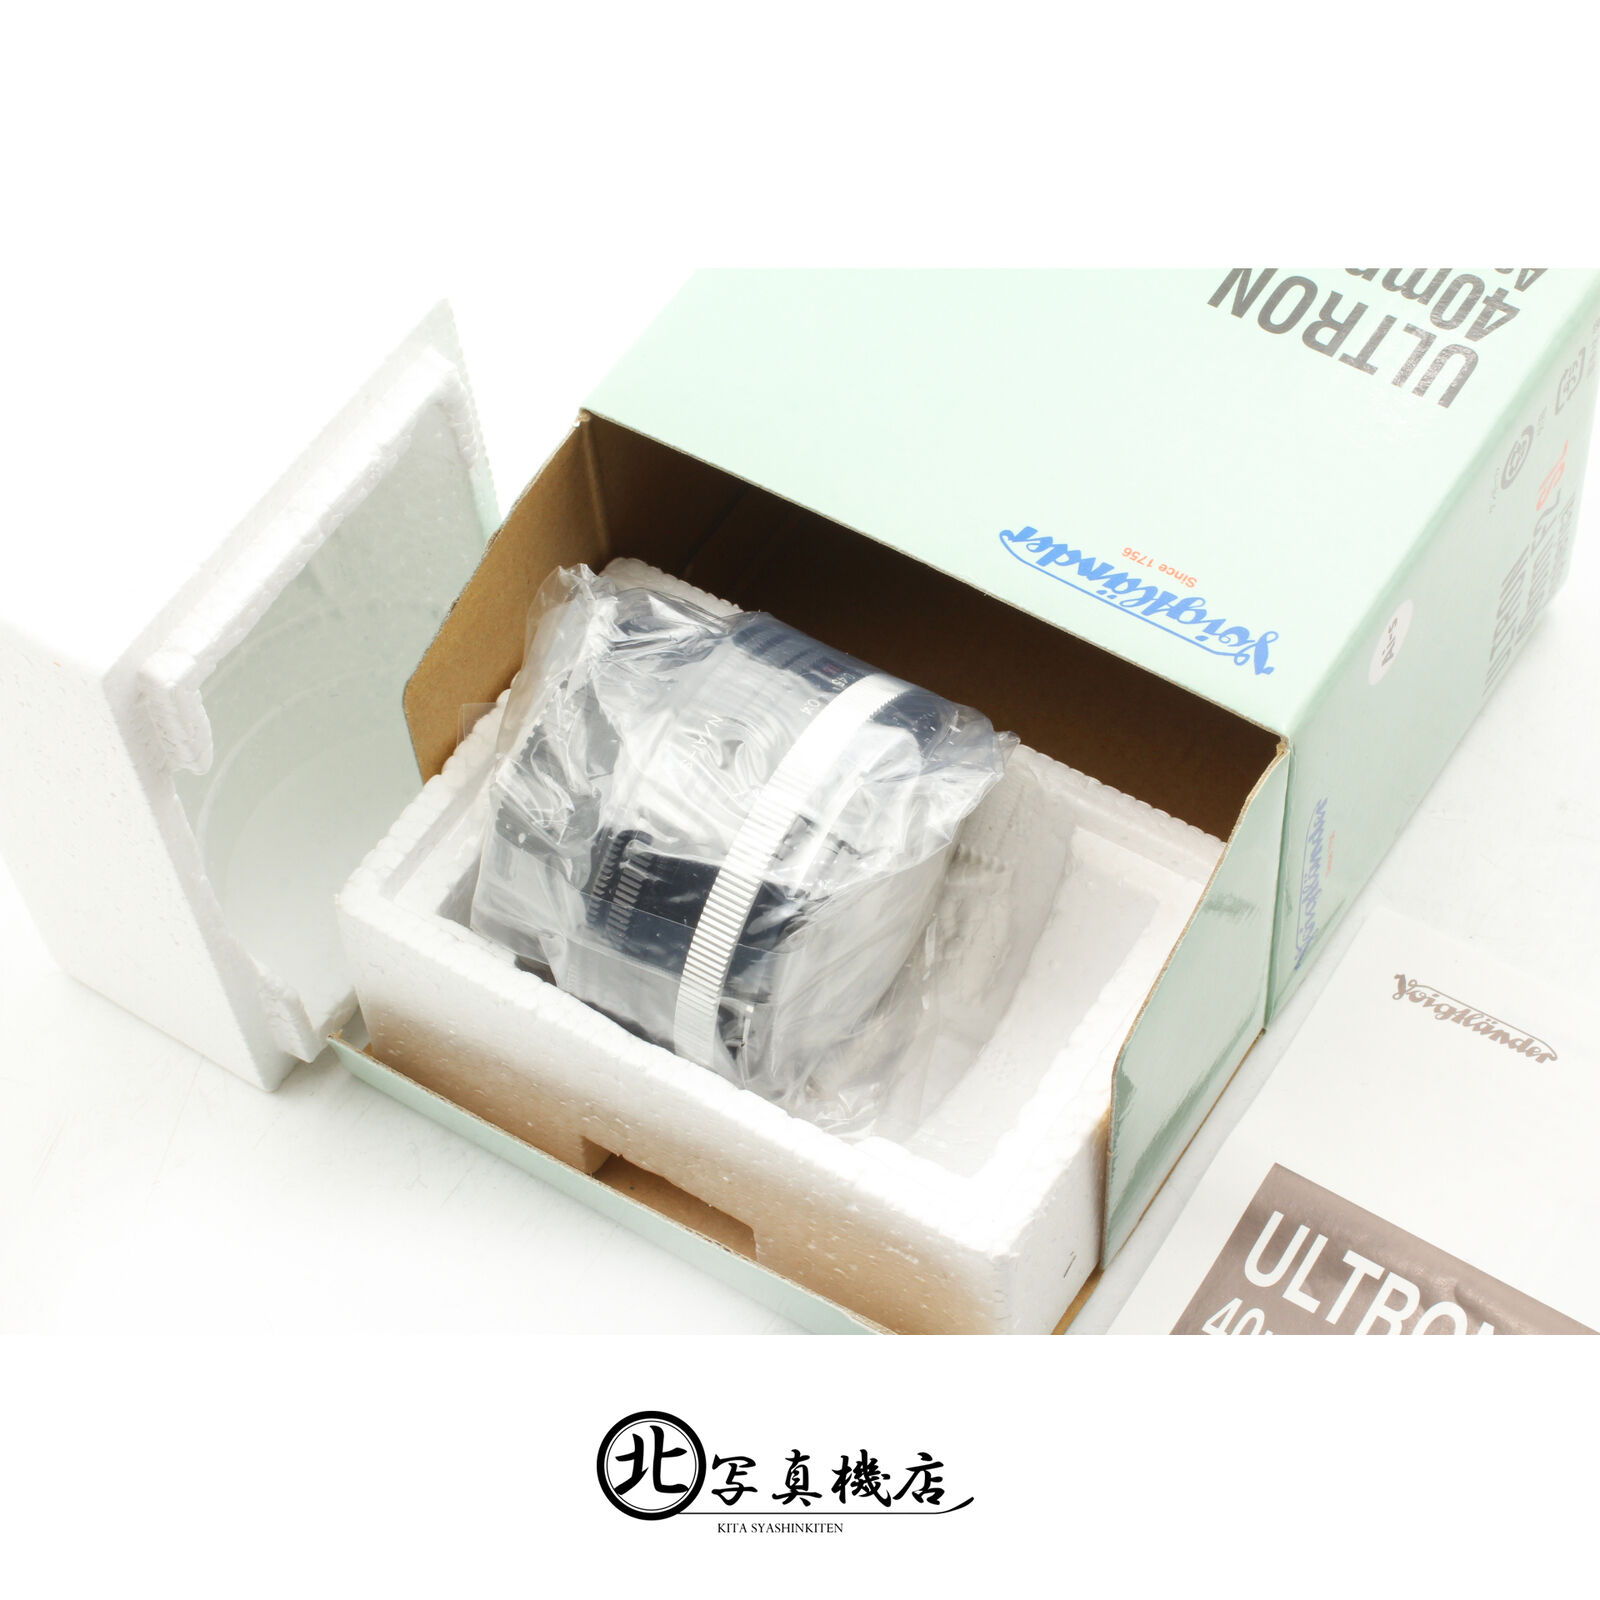 [Top MINT] Voigtlander ULTRON 40mm F2 Aspherical SL Ais for nikon From JAPAN